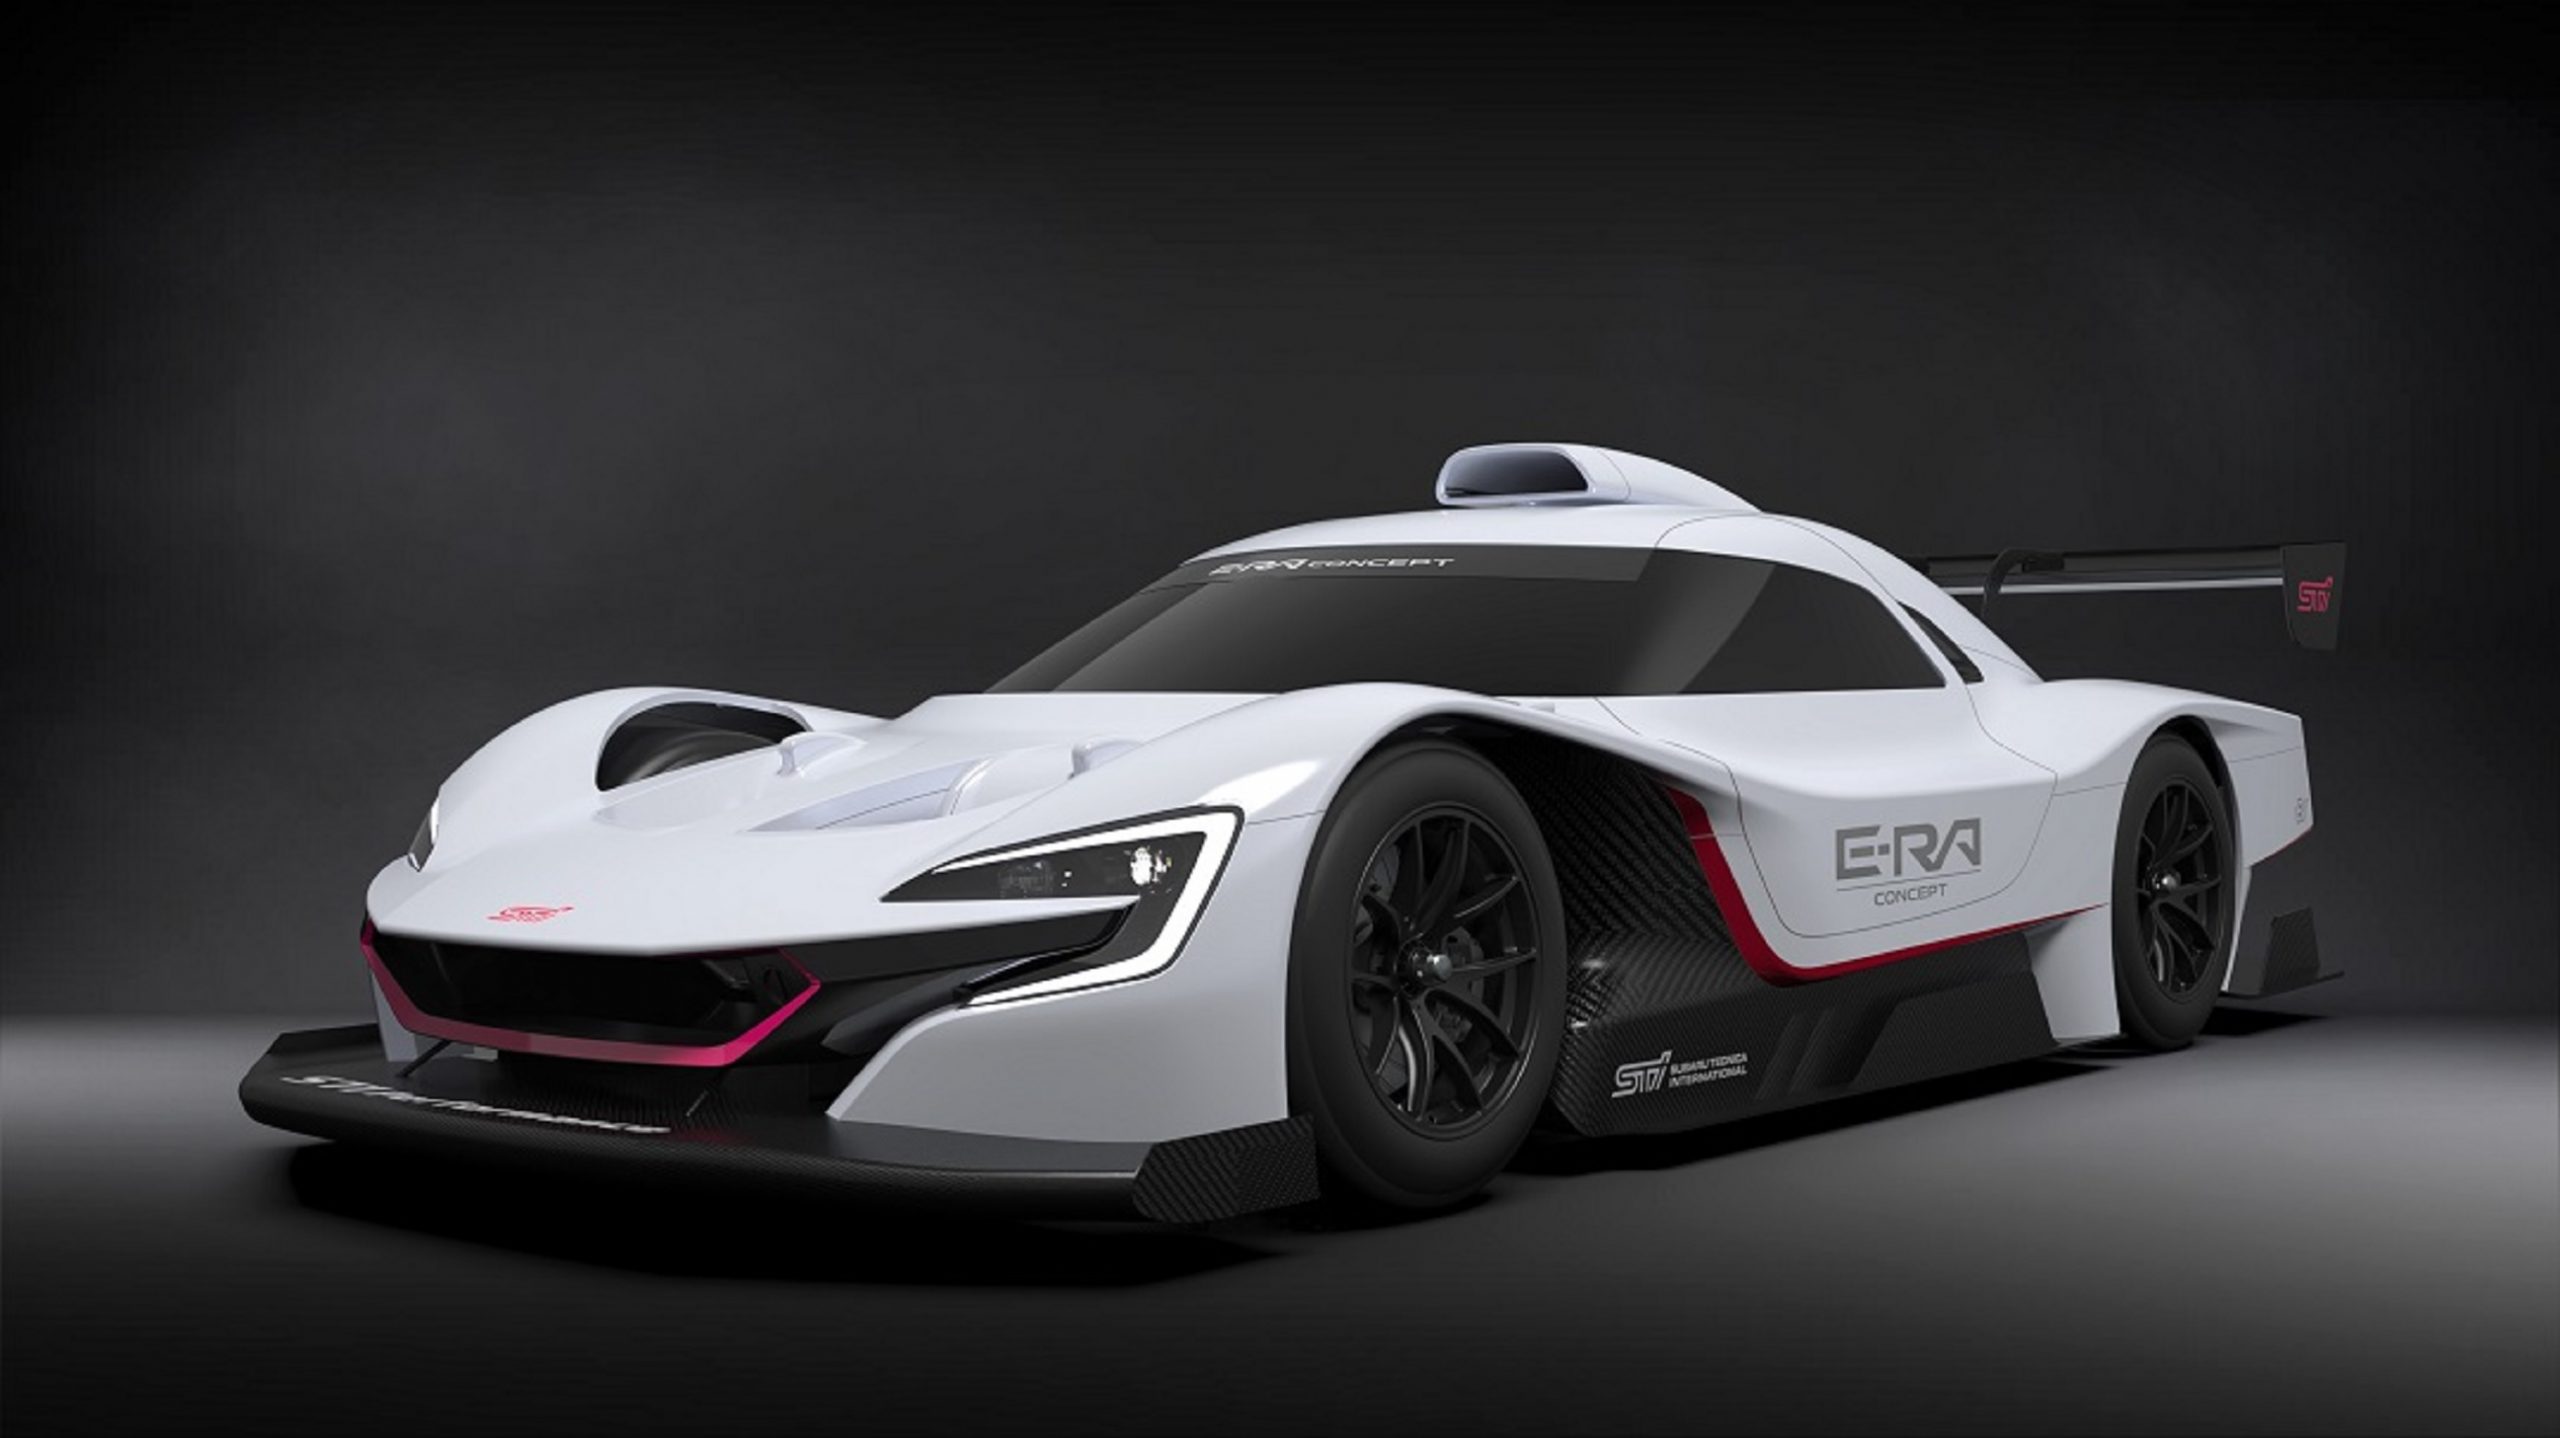 The white-and-black 2022 Subaru STI E-RA Concept electric race car